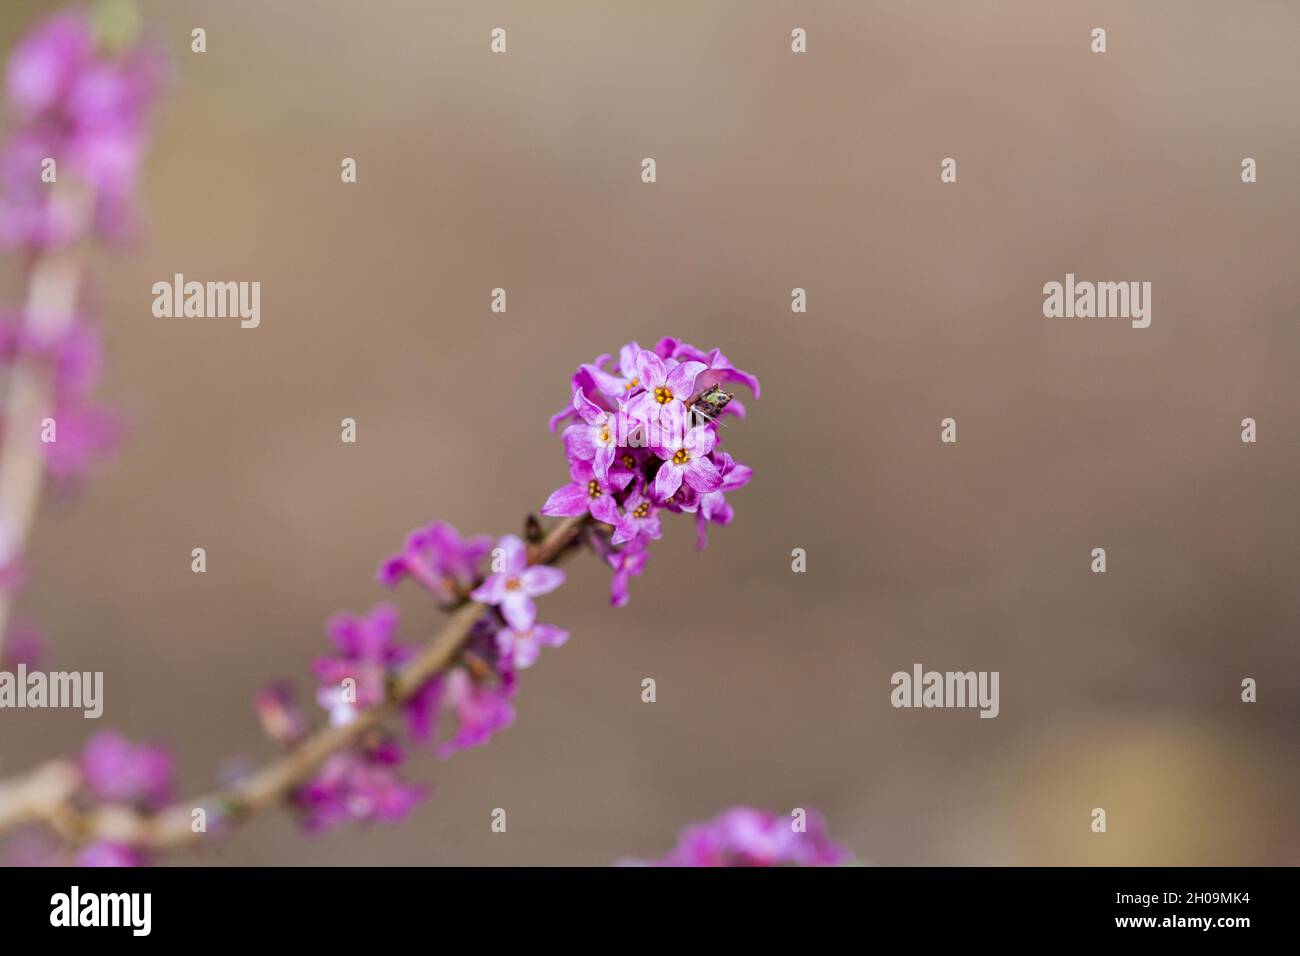 Close up of Daphne mezereum flower. Also known as Mezereum, February Daphne or Sprunge Laurel. Purple colored flower. Stock Photo